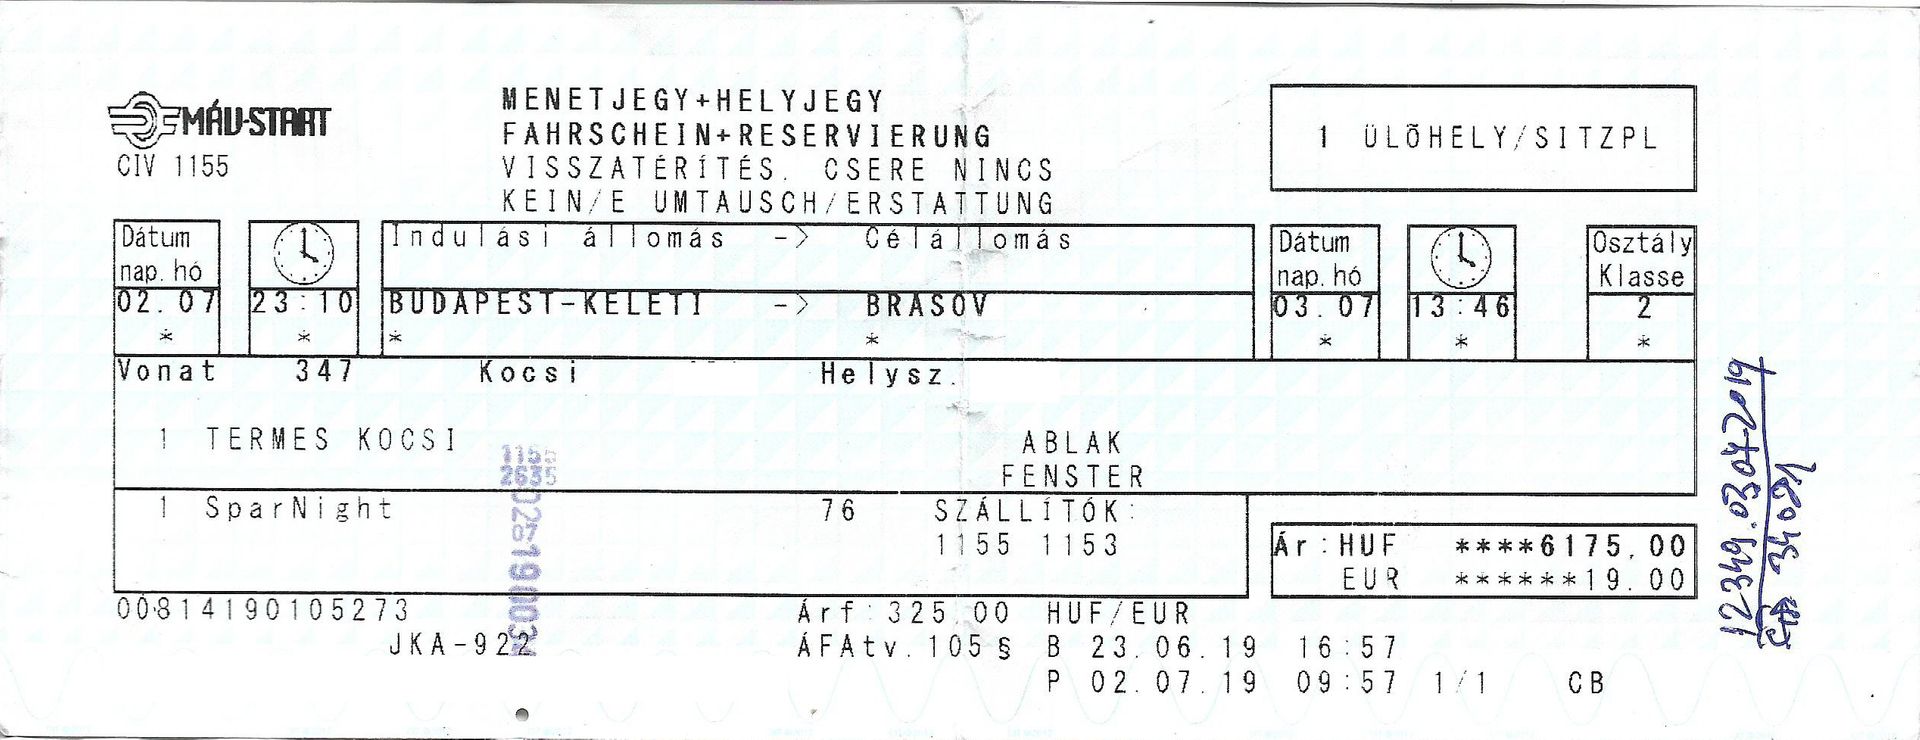 Calatorie Feroviara Amsterdam - Targoviste Ticket%20Budapest%20-%20Brasov%202_zpsnve7fz5e